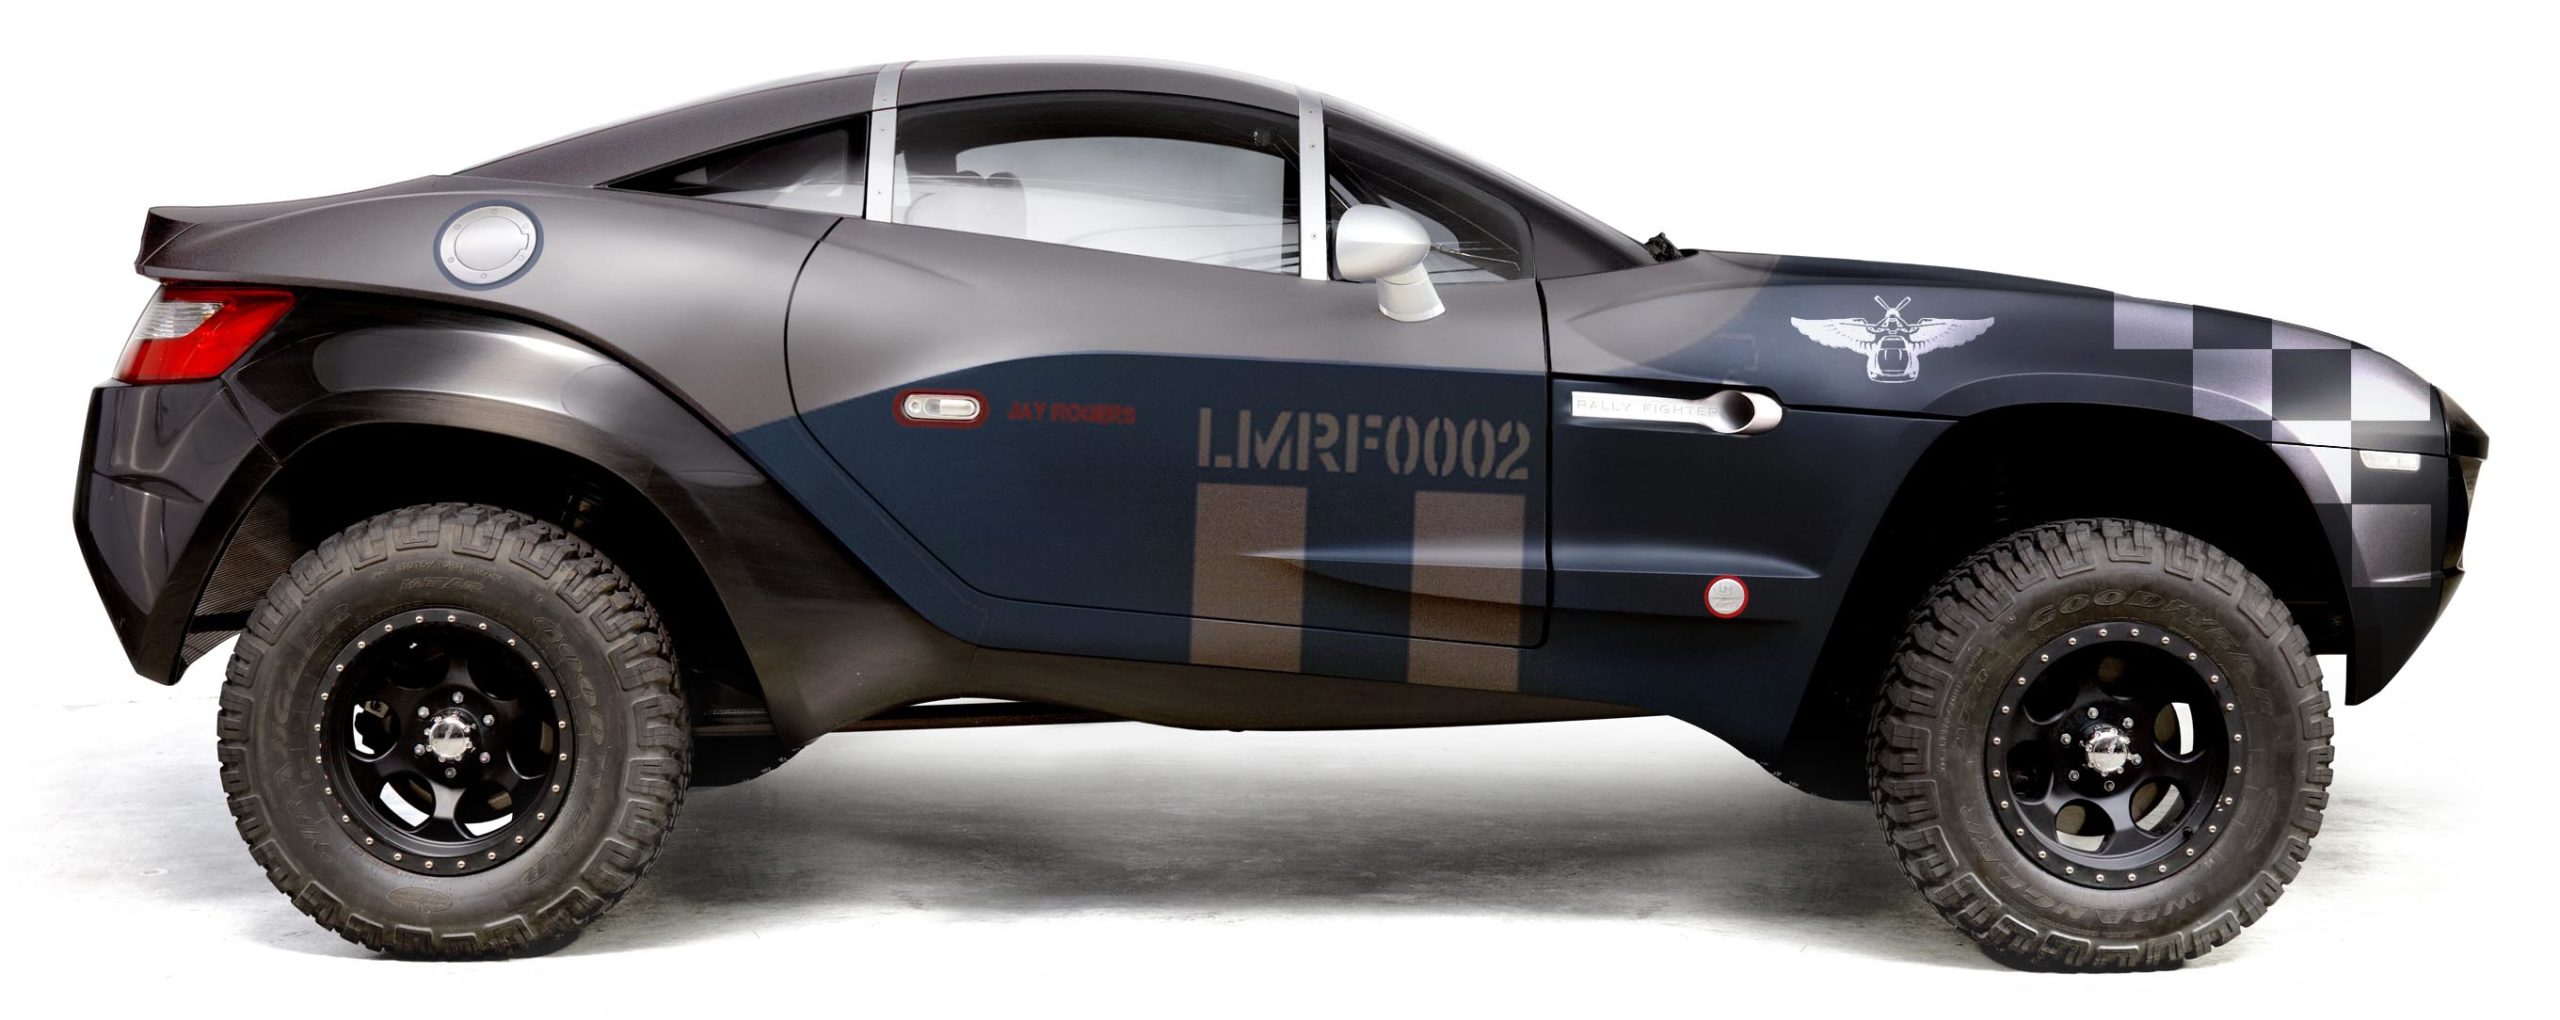 A Visit To Local Motors, Badass Innovators Of Future Vehicle Design